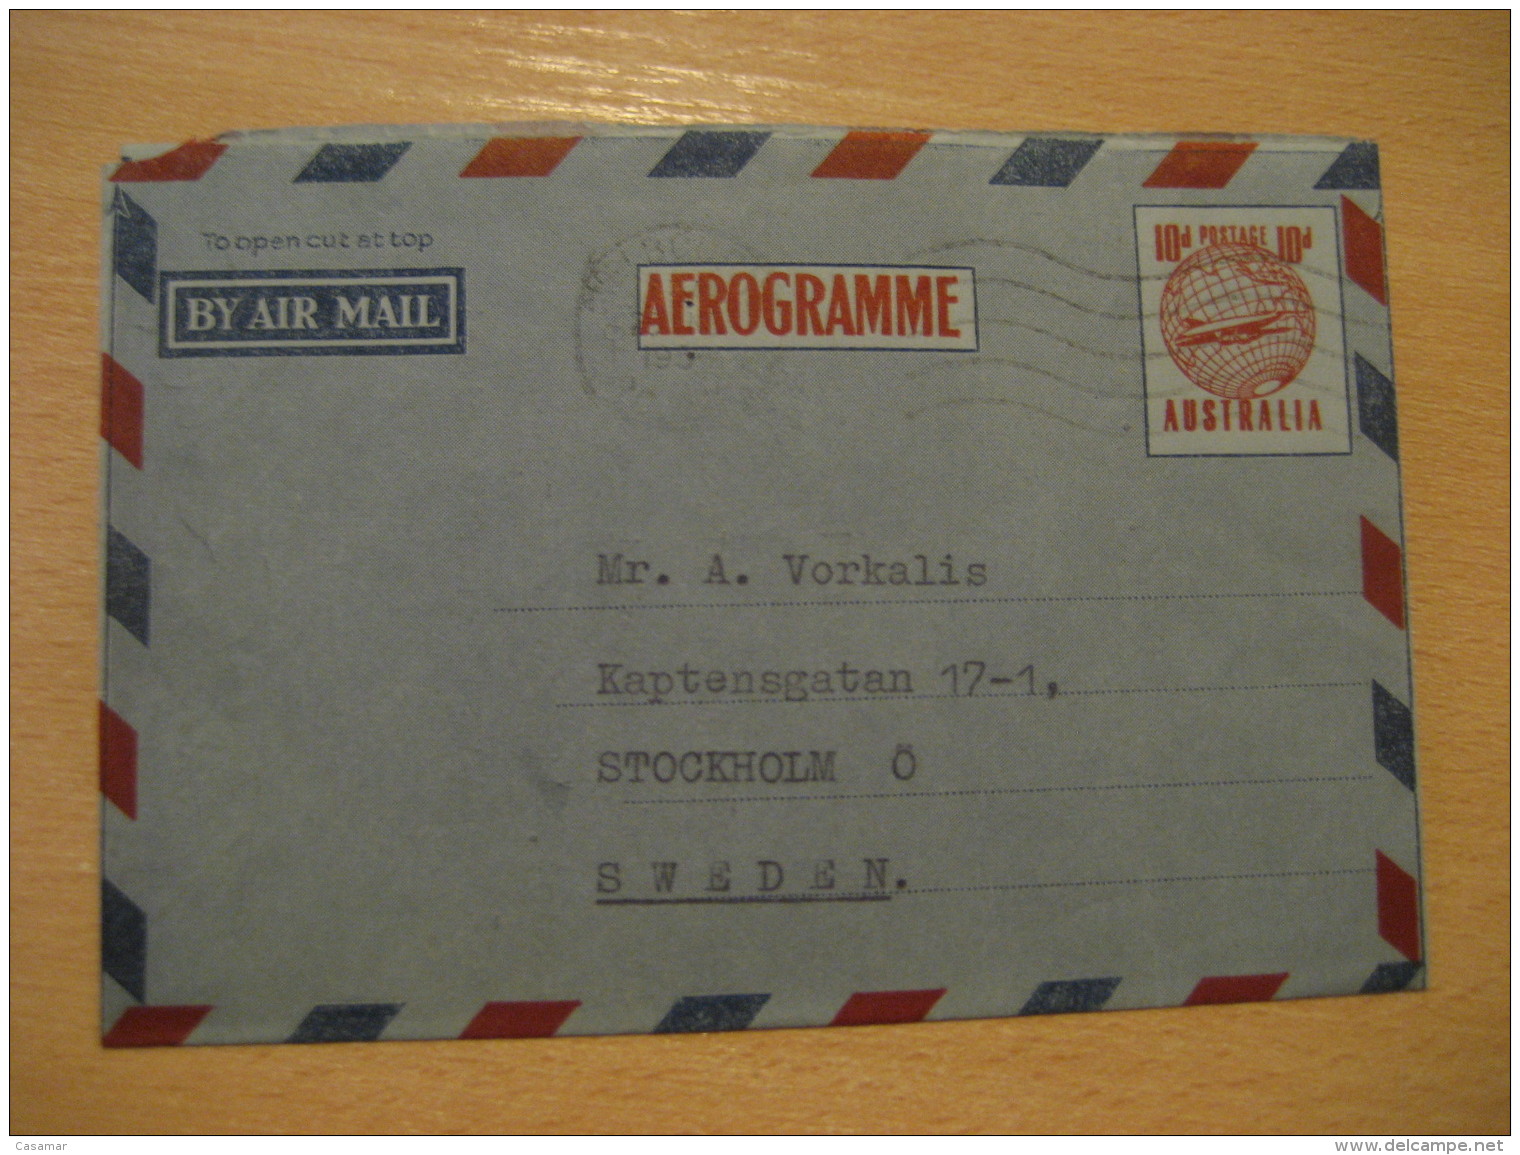 CAMBERWELL 1954 To Stockholm Sweden Aerogramme Air Mail AUSTRALIA - Aerogramme